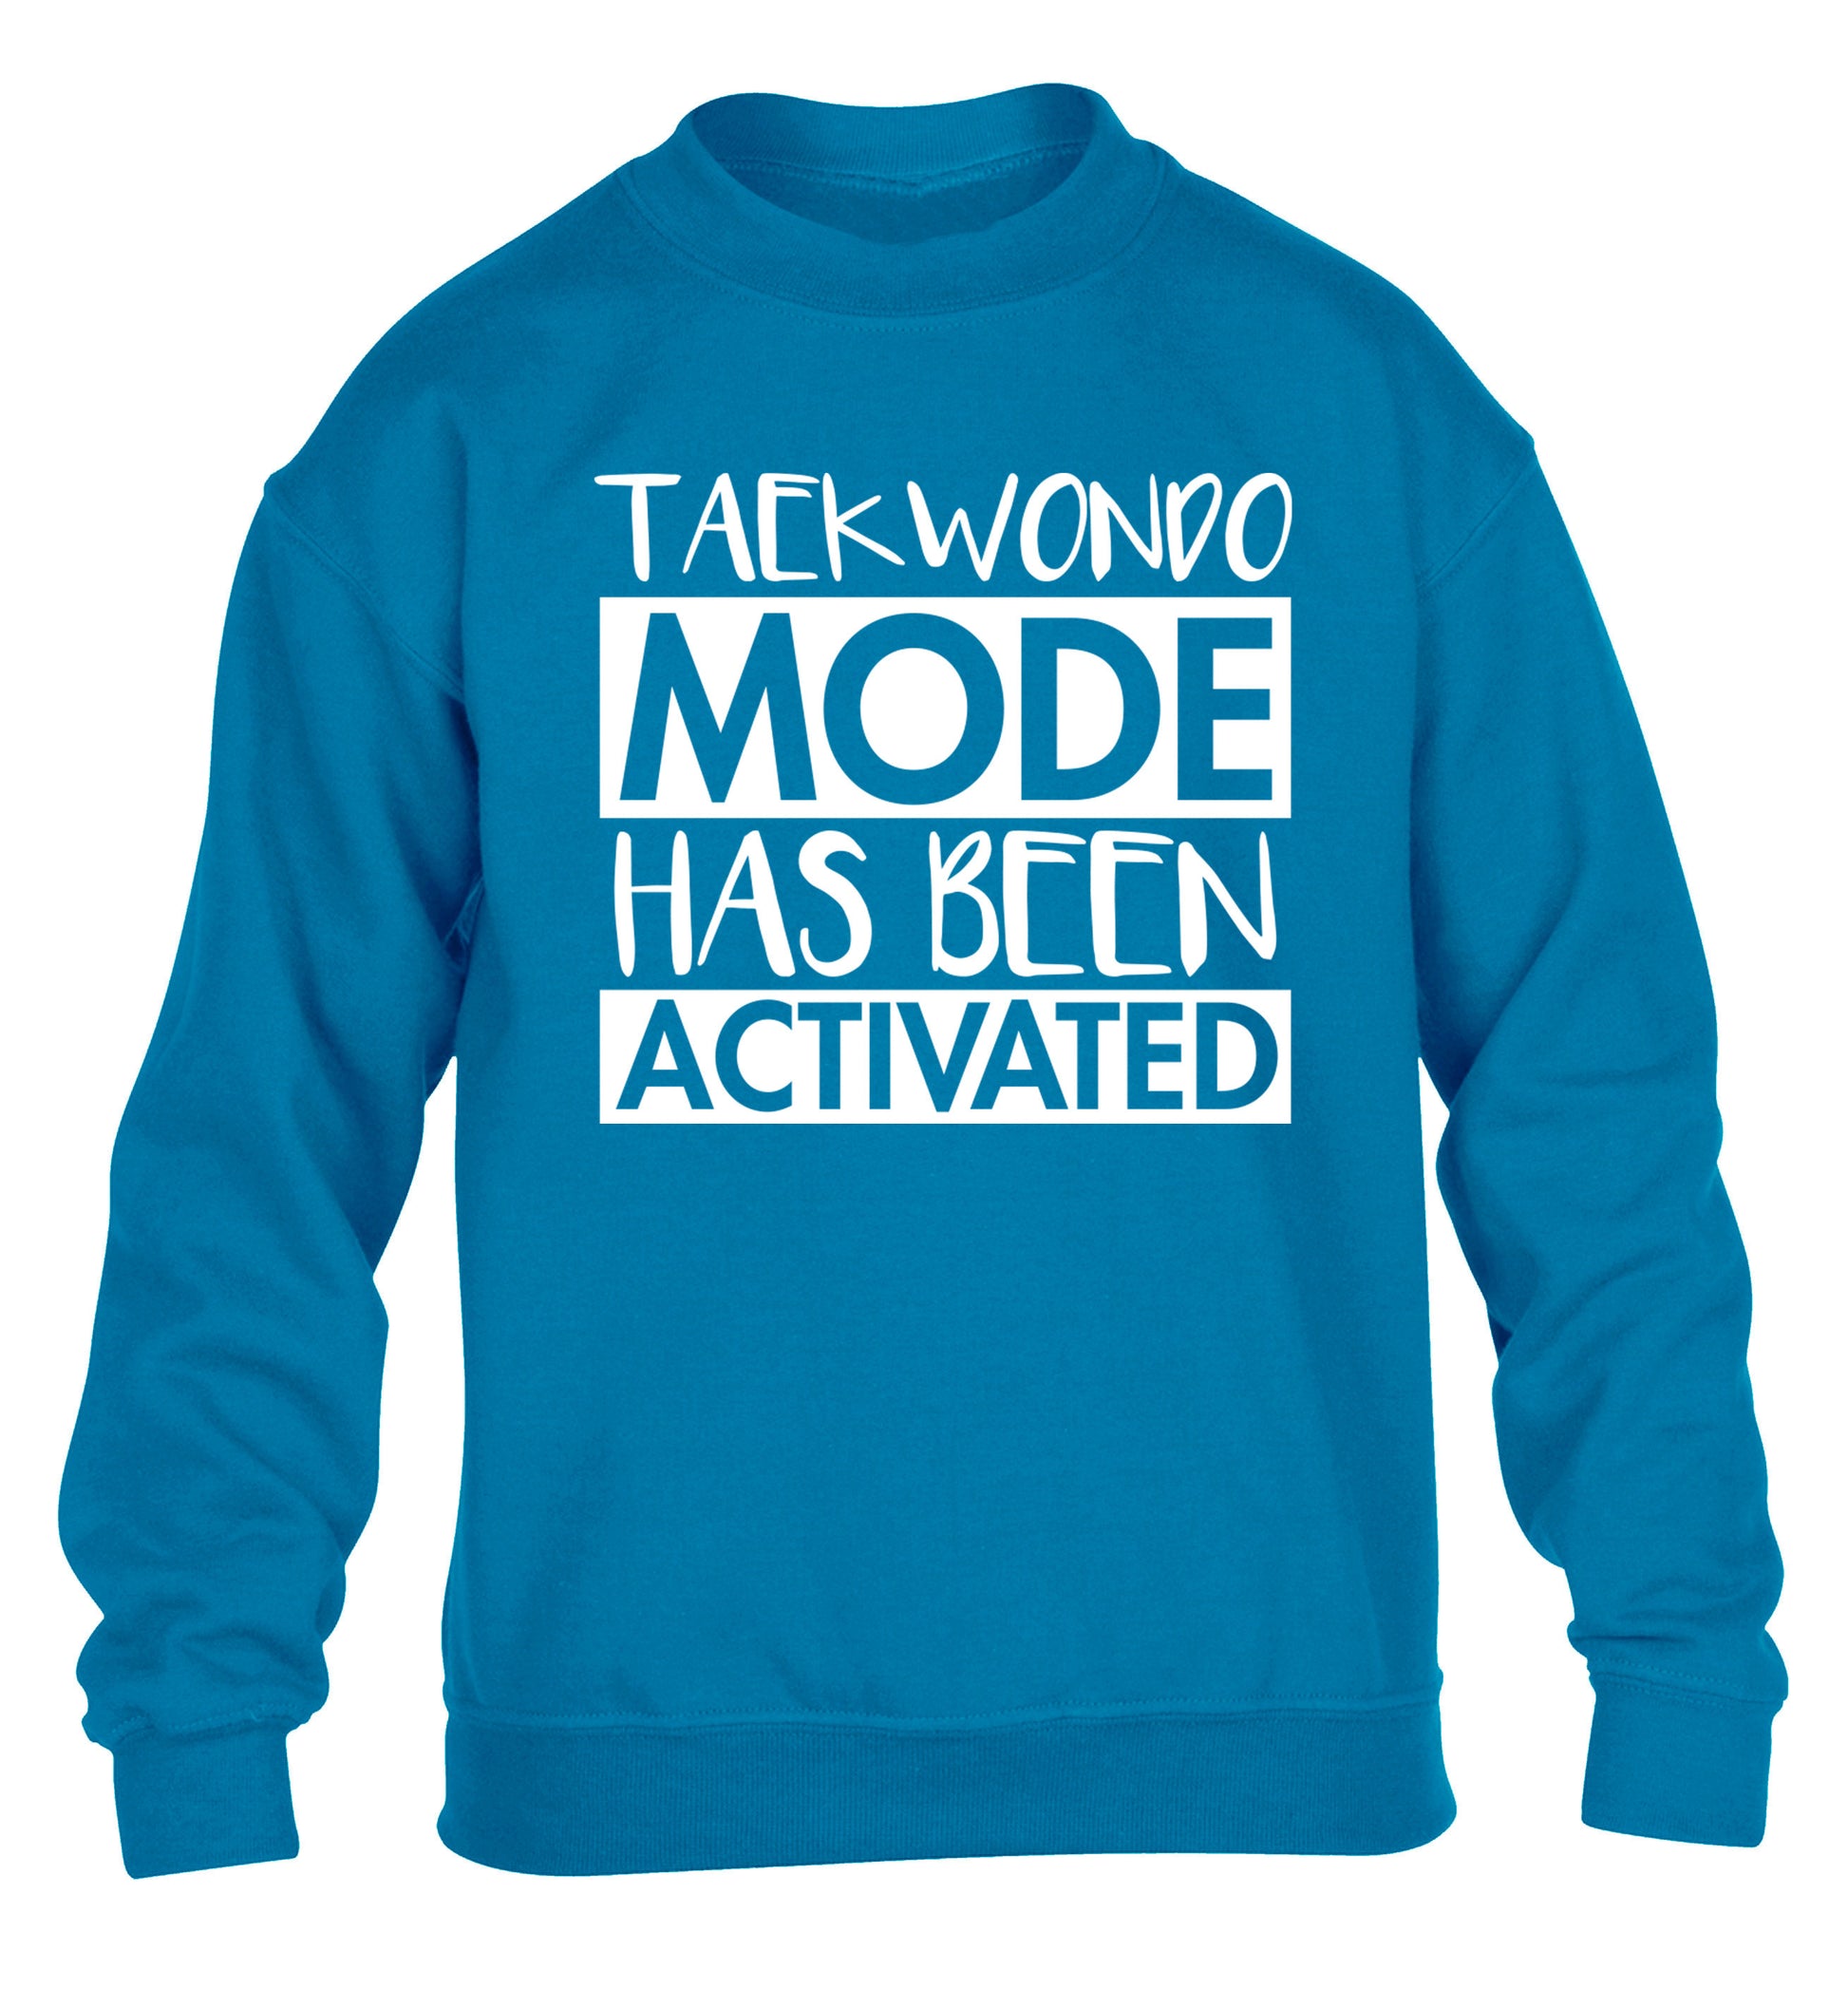 Taekwondo mode activated children's blue sweater 12-14 Years